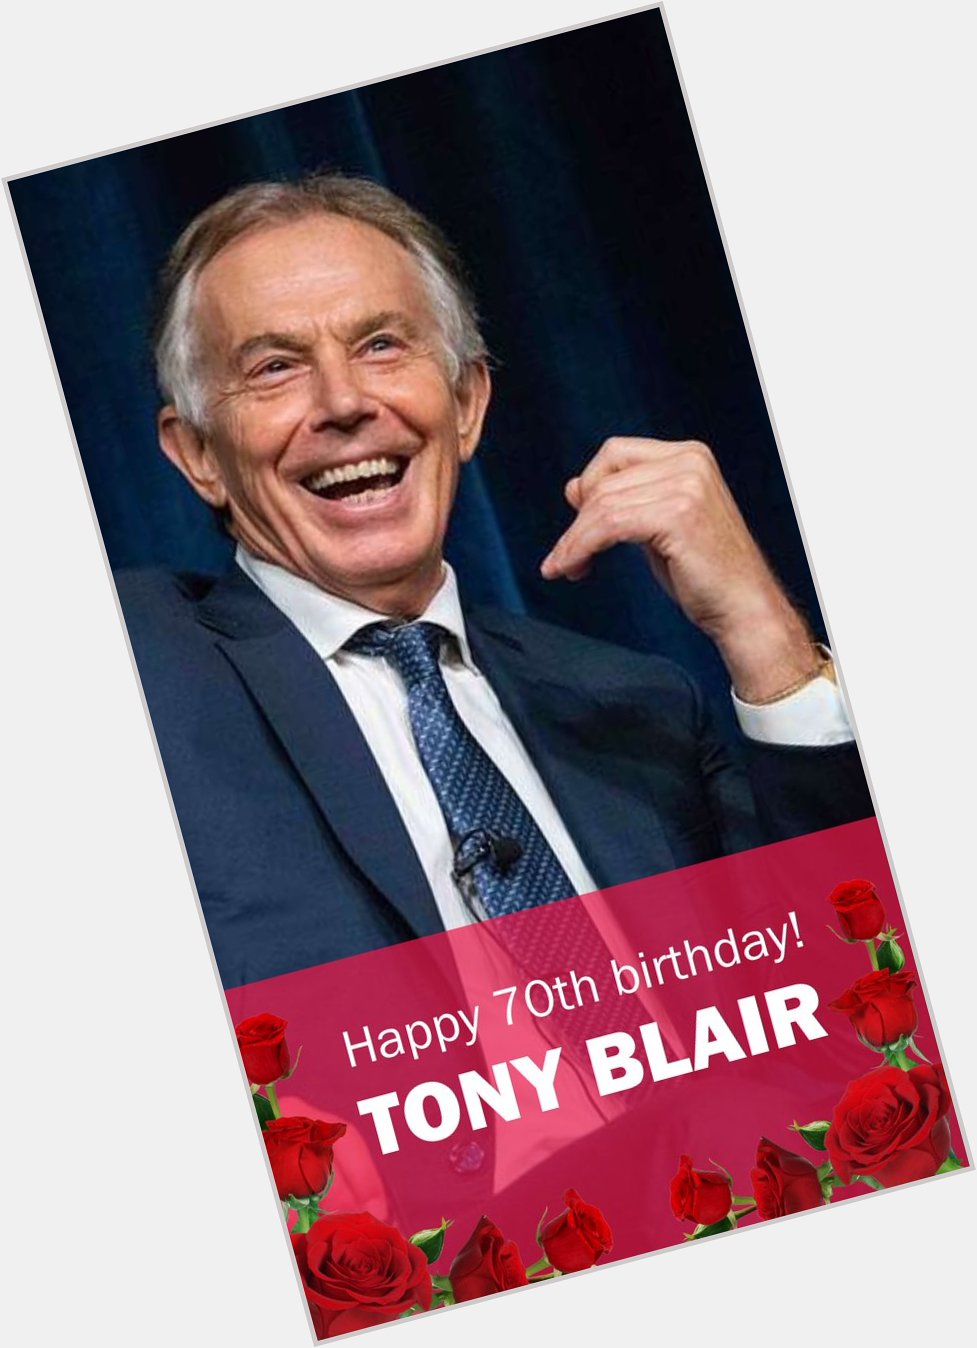 Happy birthday Tony Blair on your 70th birthday!  